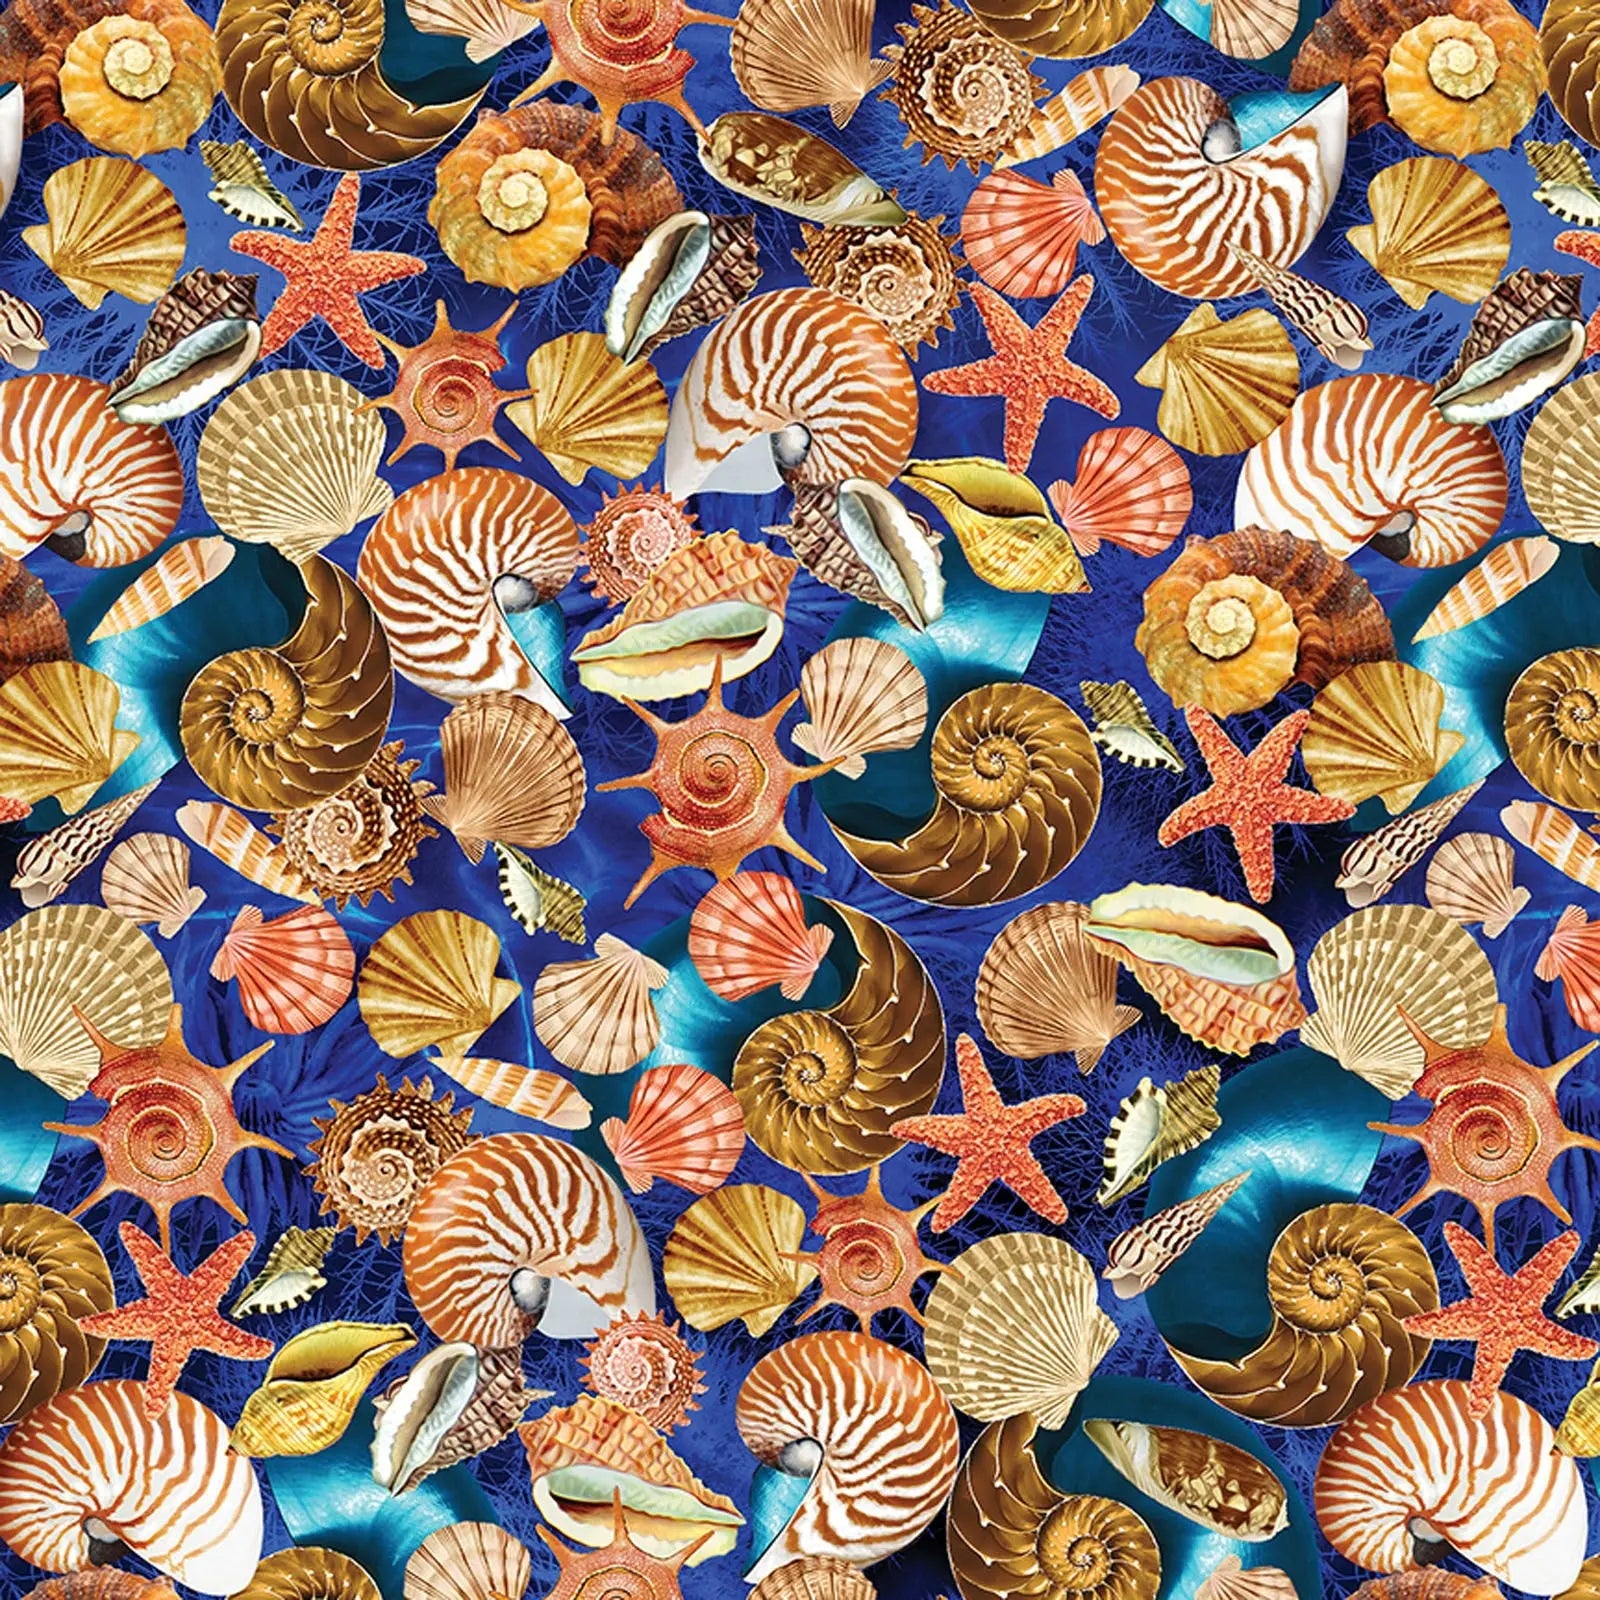 Seasell wideback fabric